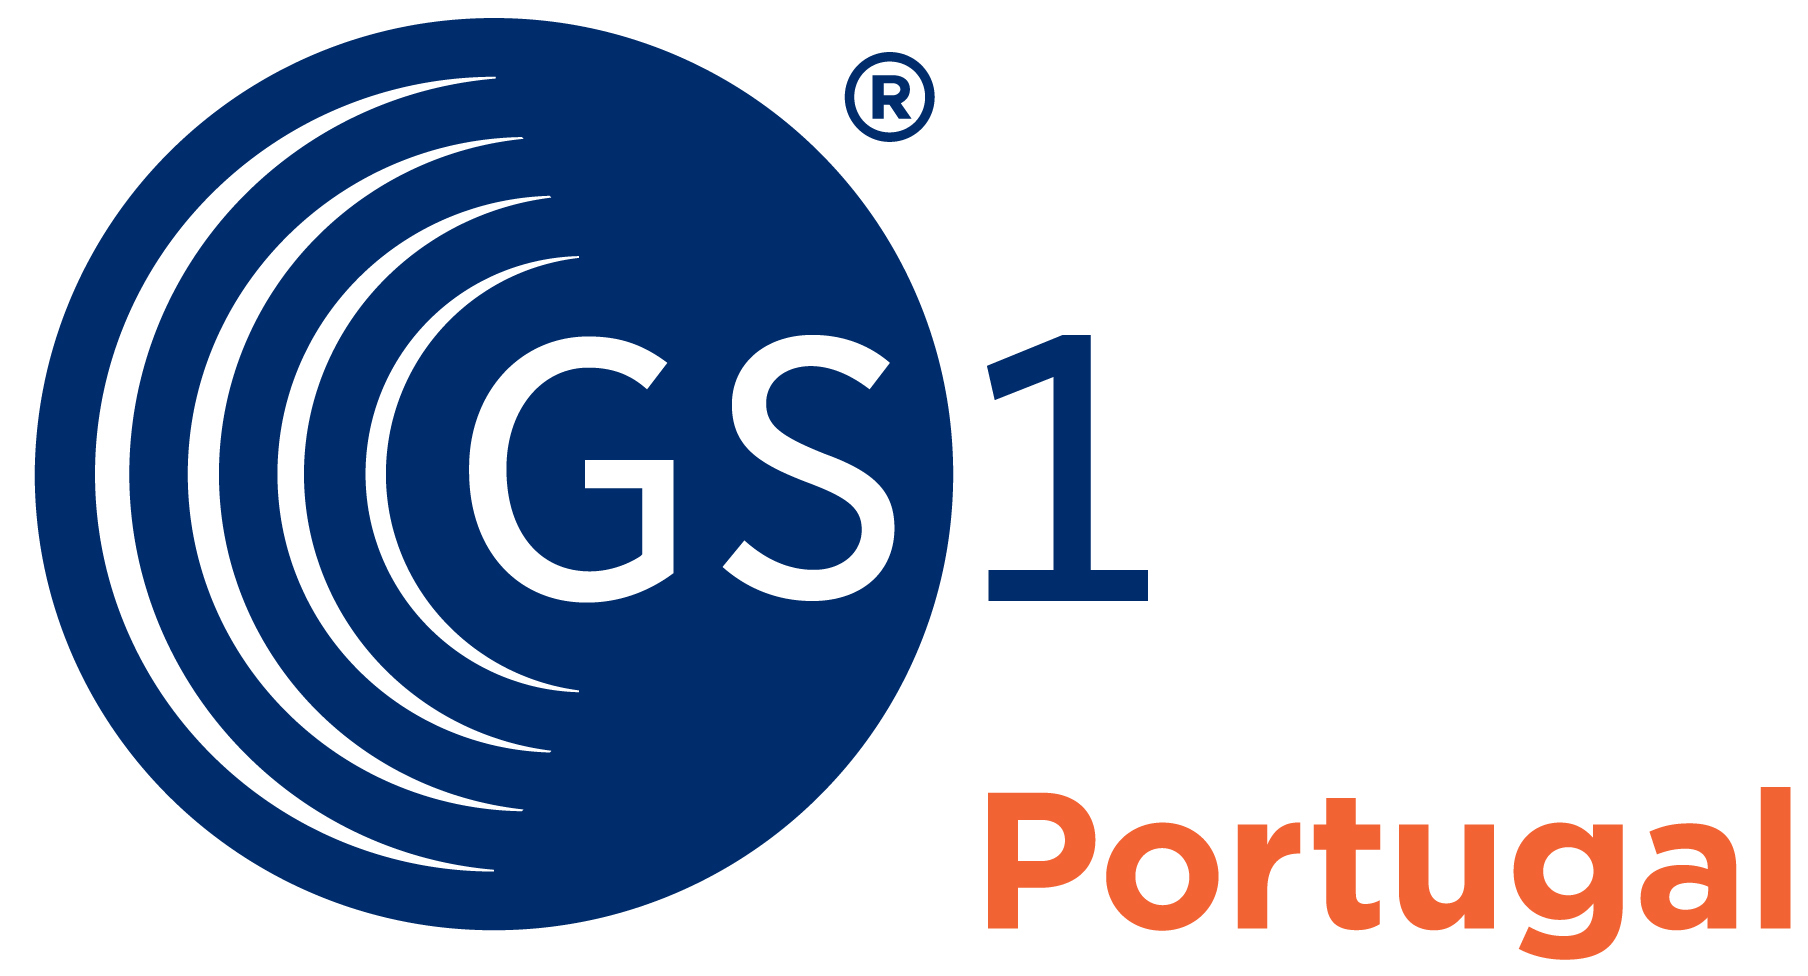 Say U renews GS1 Portugal's communication strategy